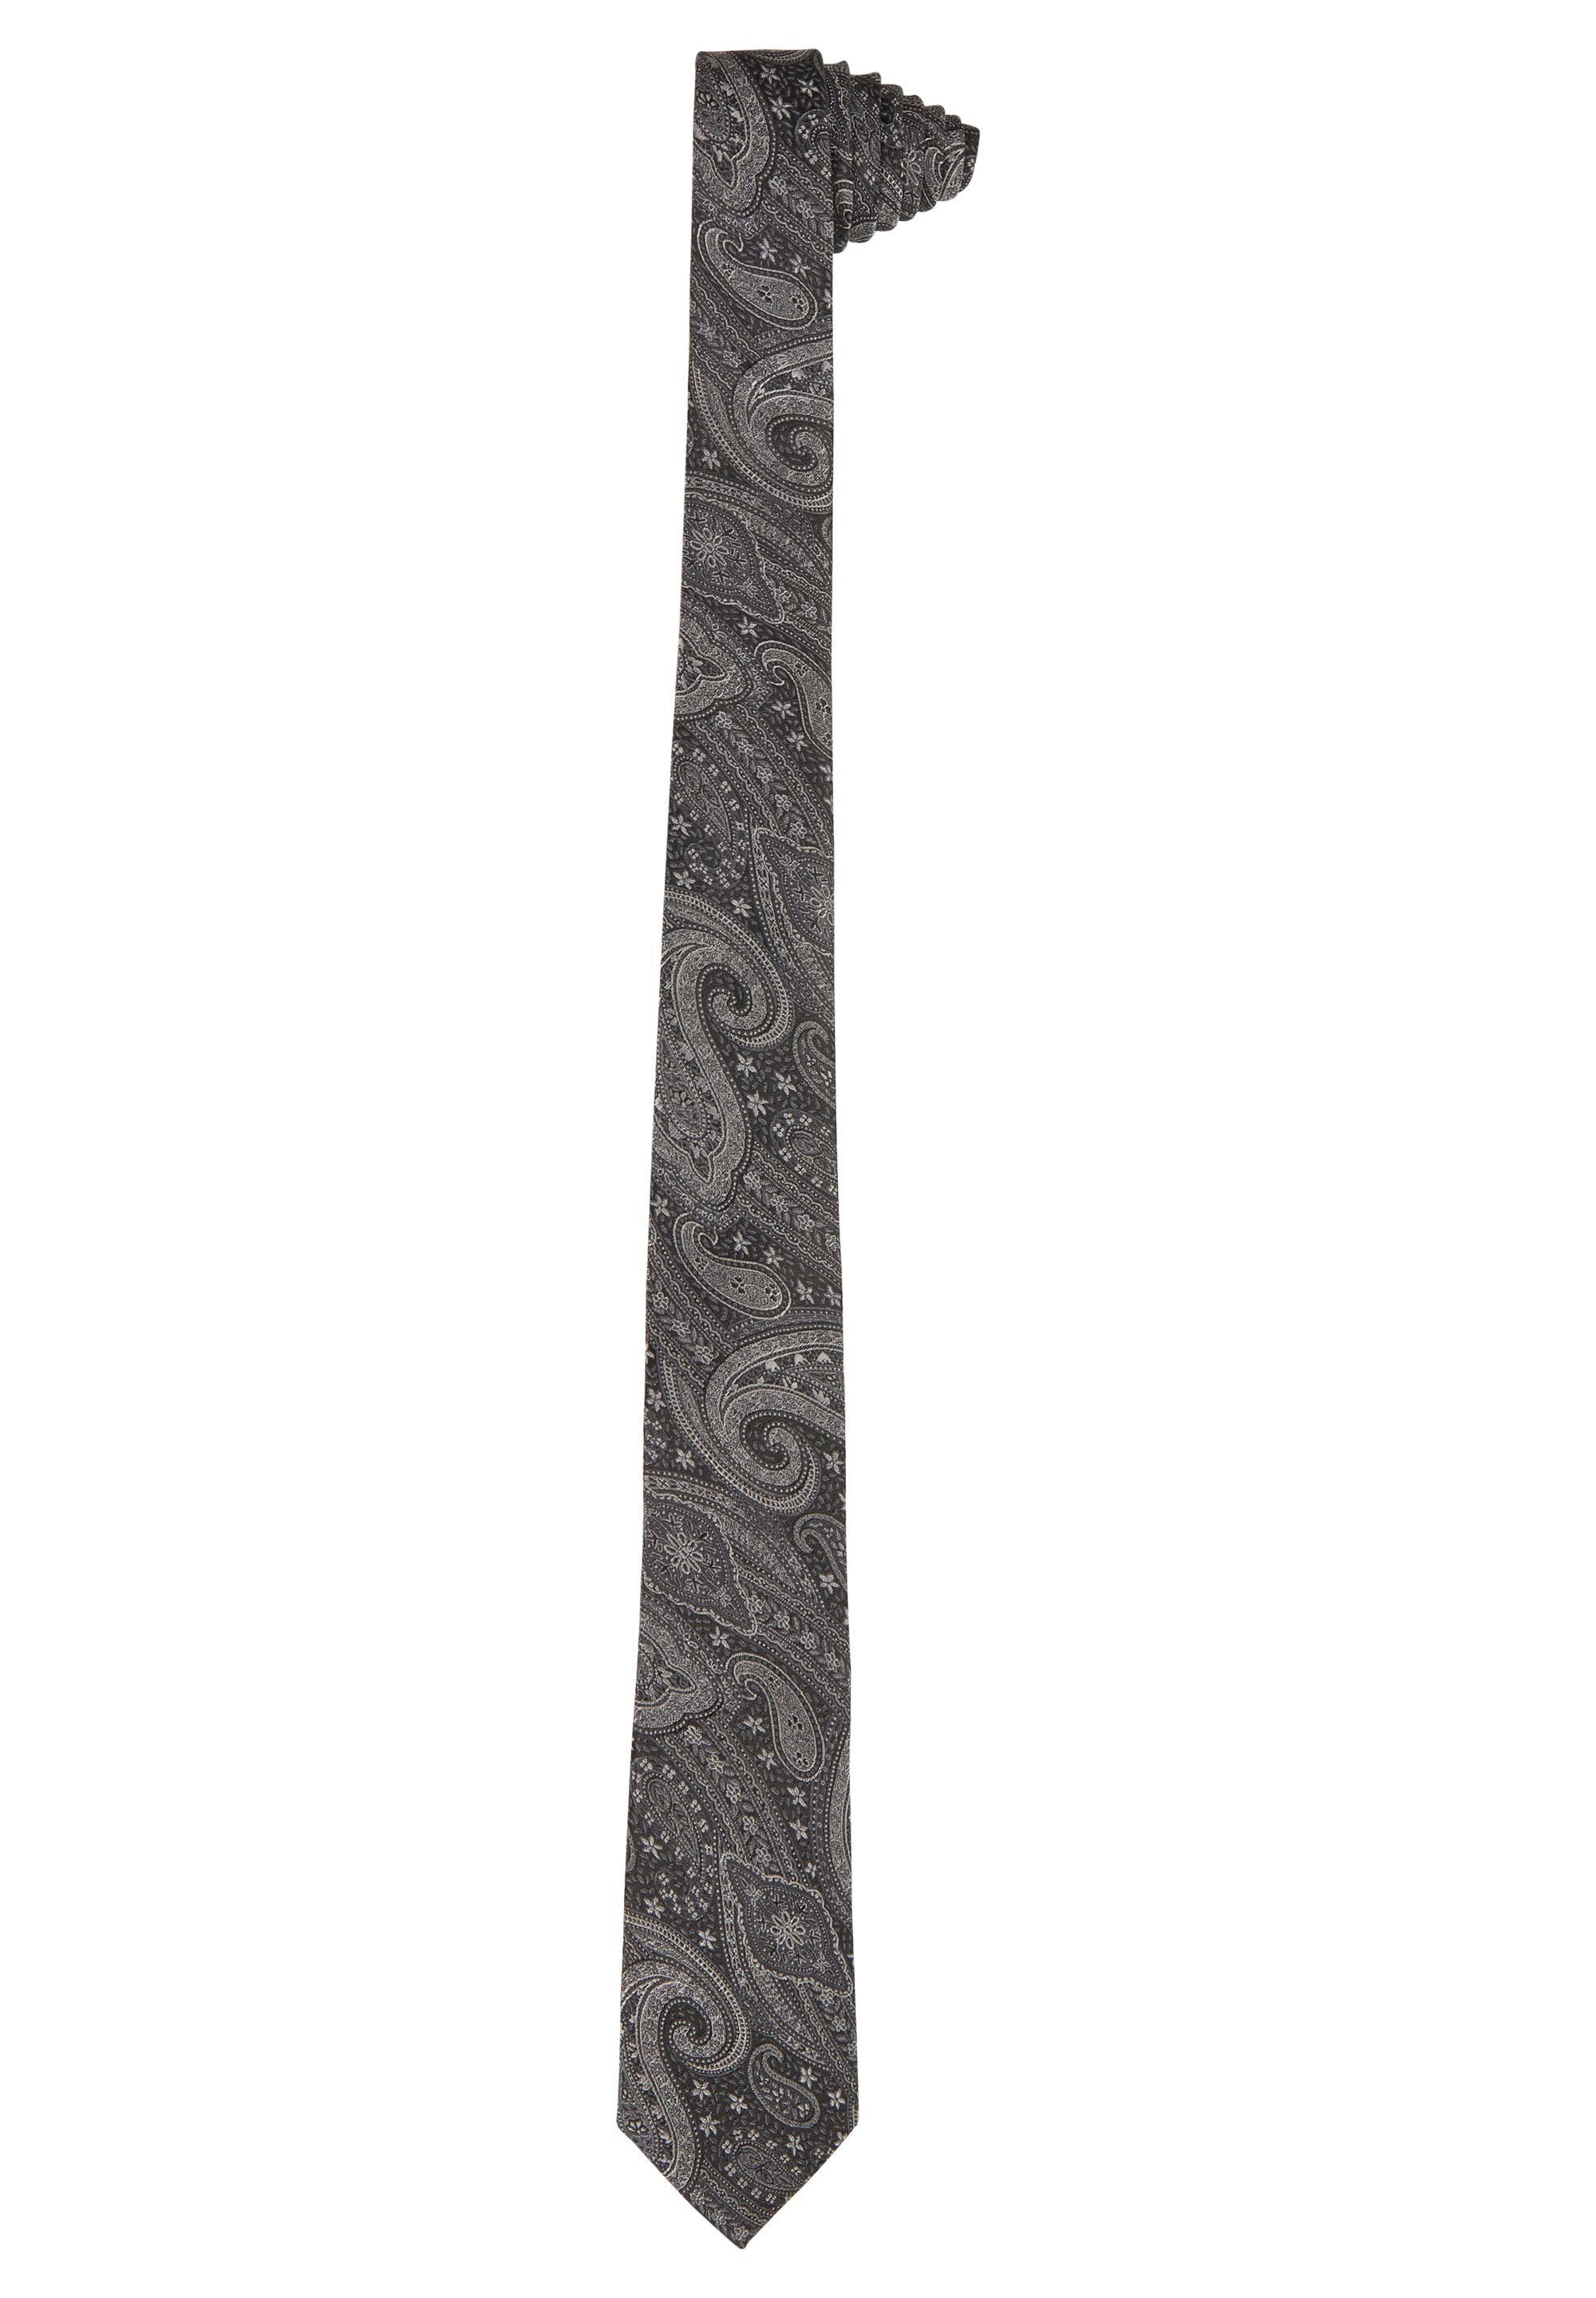 PARIS HECHTER Paisley-Muster mit Krawatte graphite